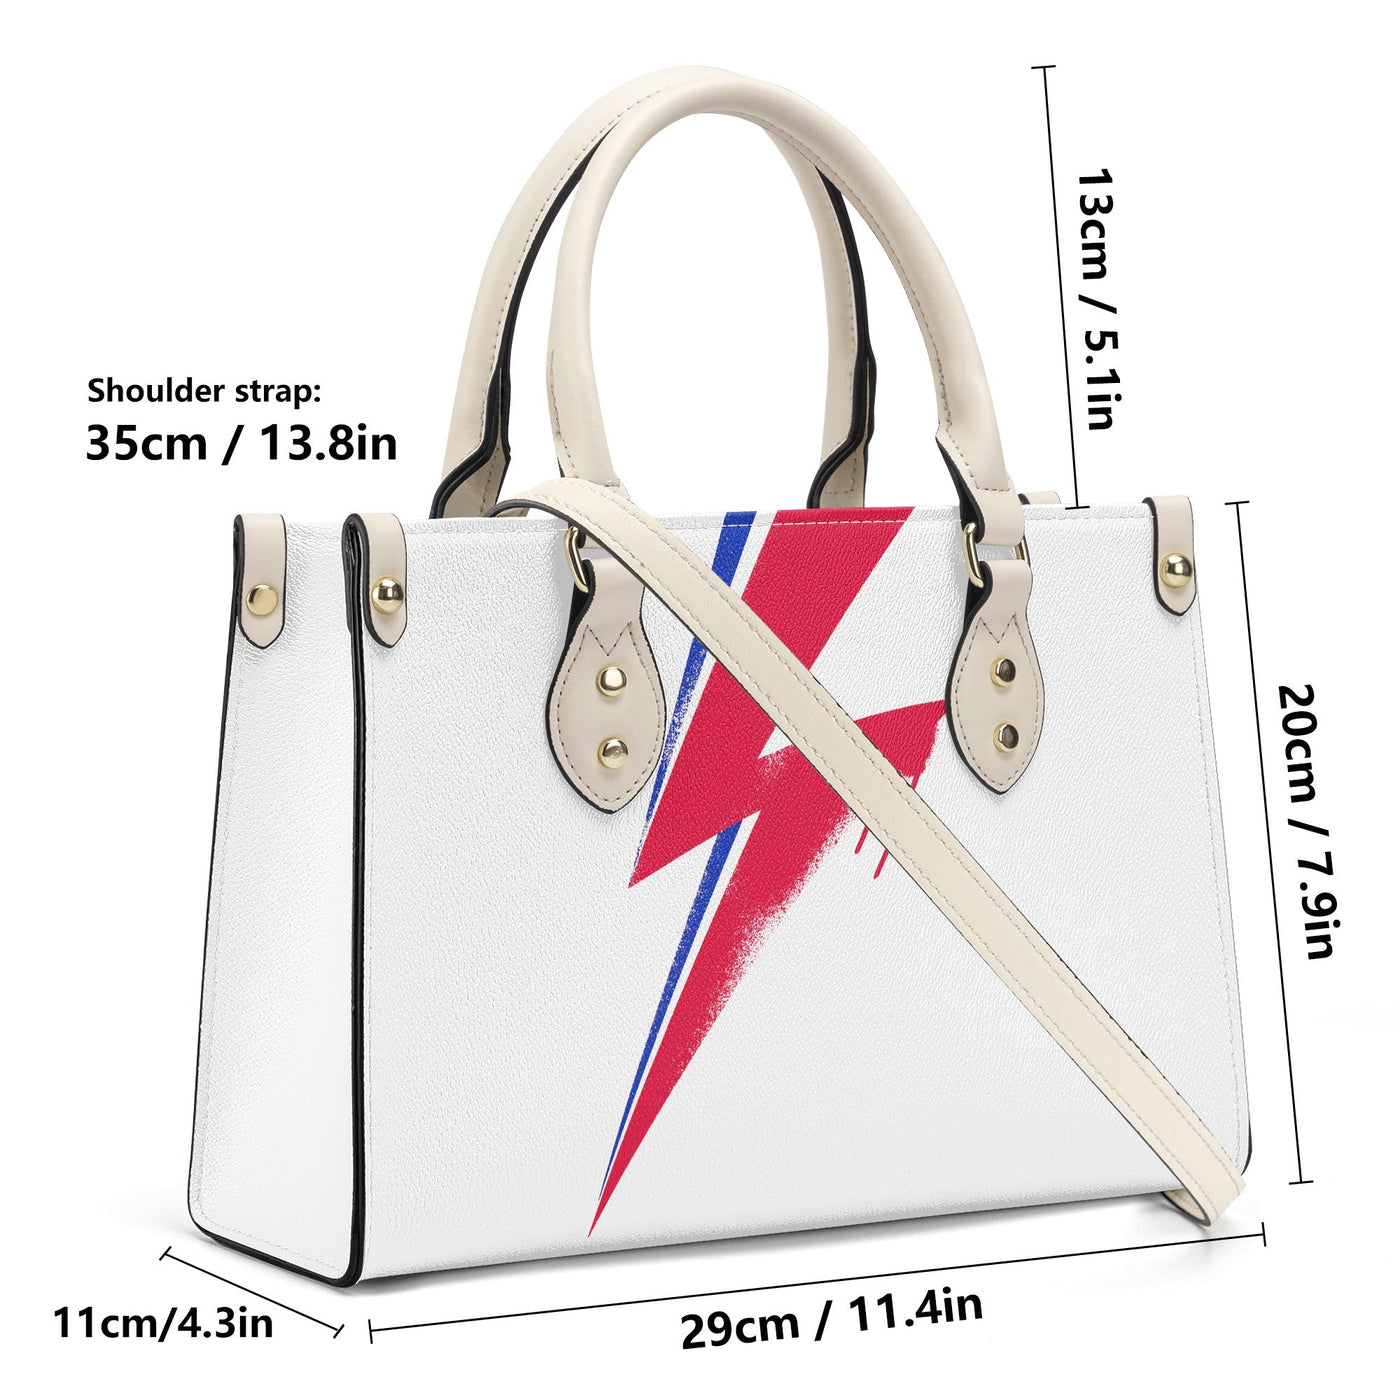 Bowie Thunderbolt Spray Paint Effect Luxury Tote Handbag